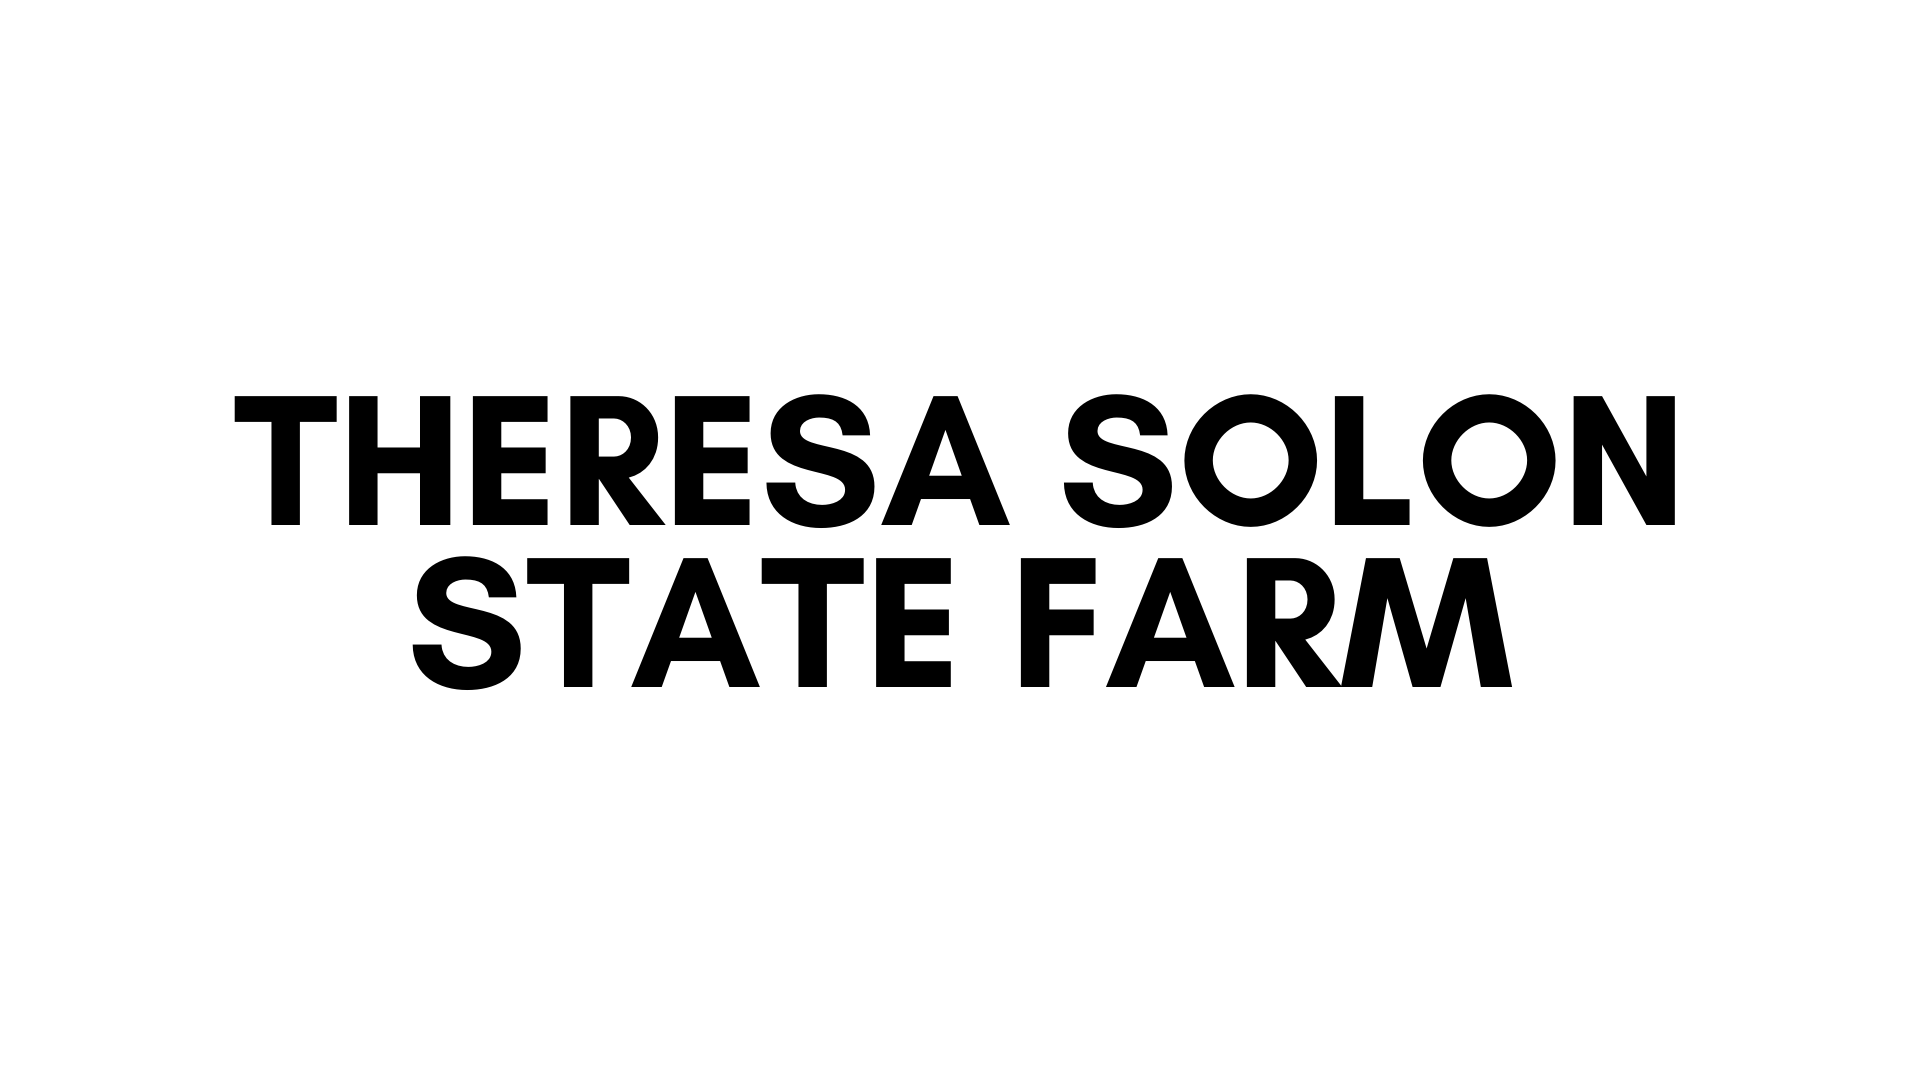 THERESA SOLON STATE FARM